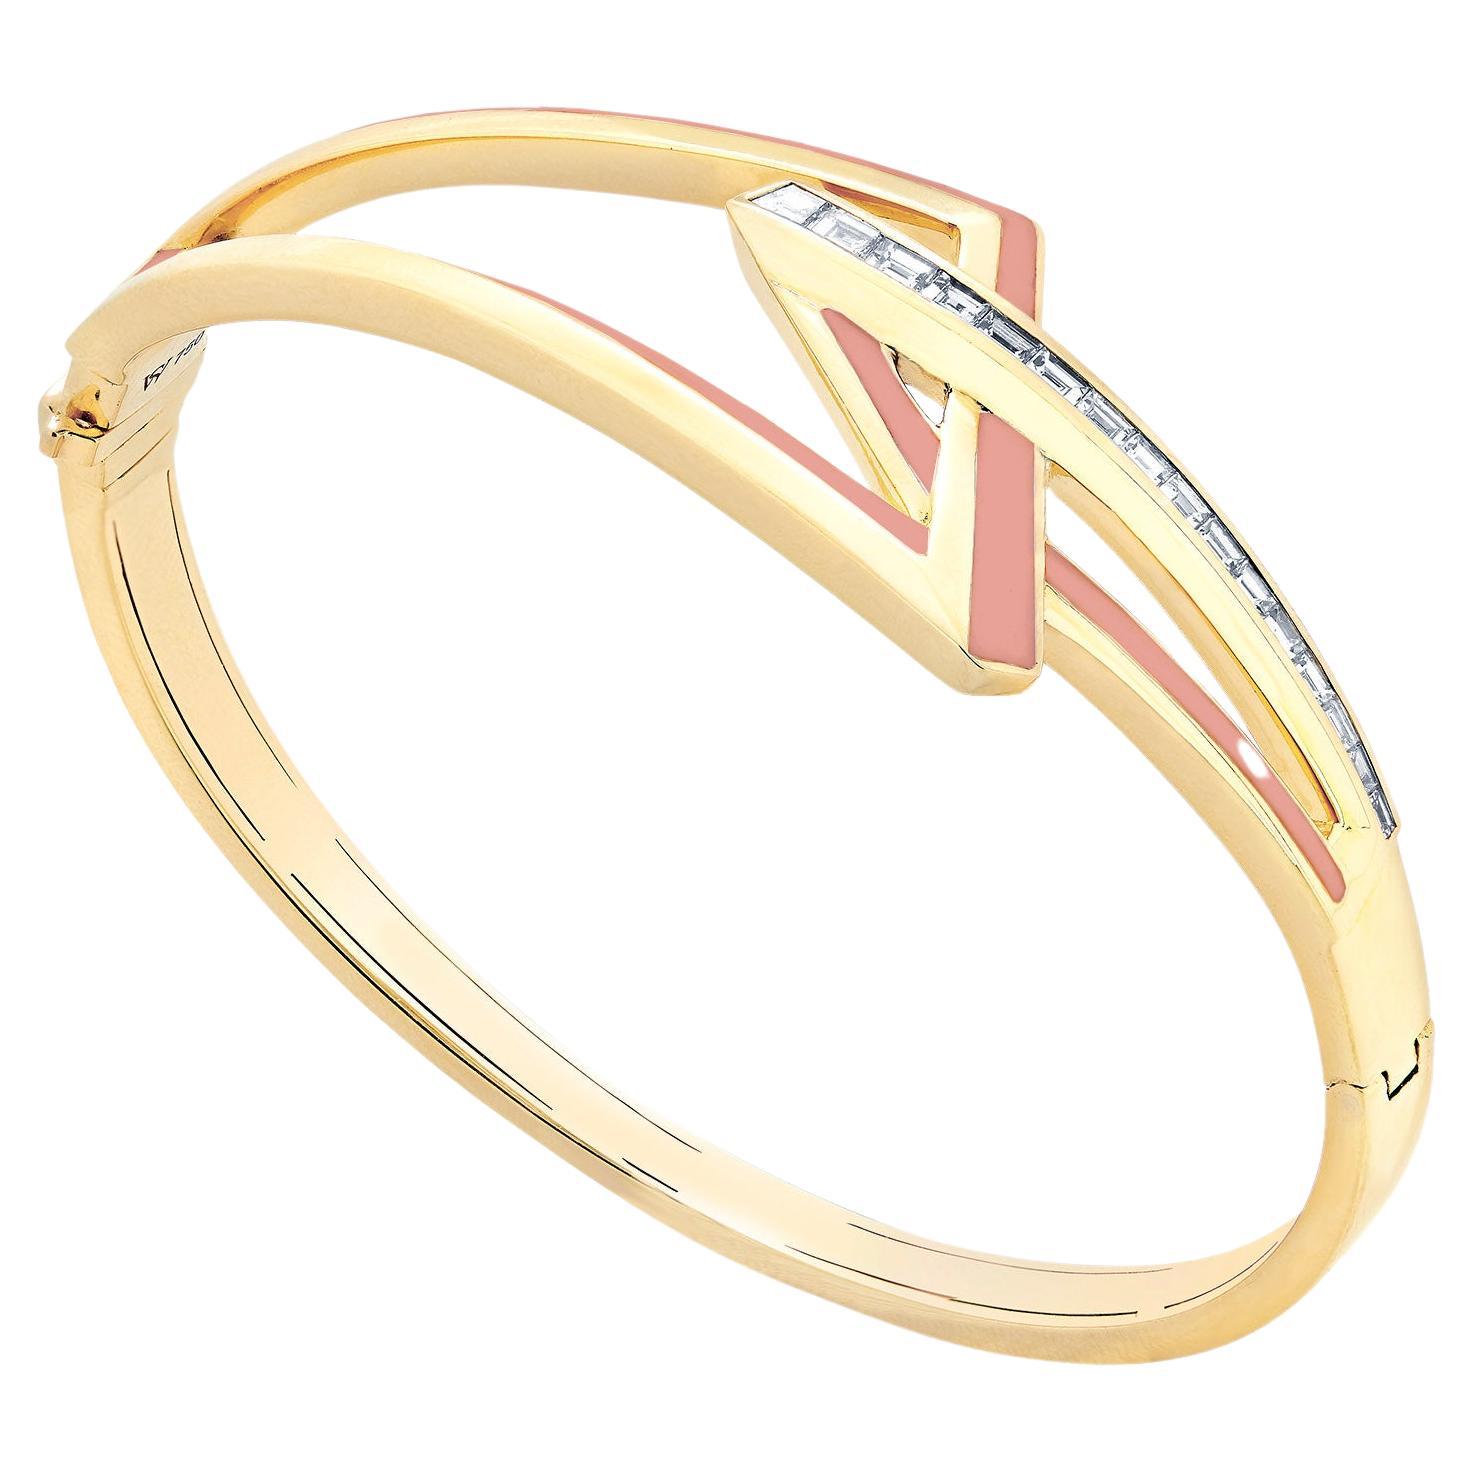 Vertigo Obtuse Bracelet - 18 Carat Yellow Gold and White Diamond For Sale